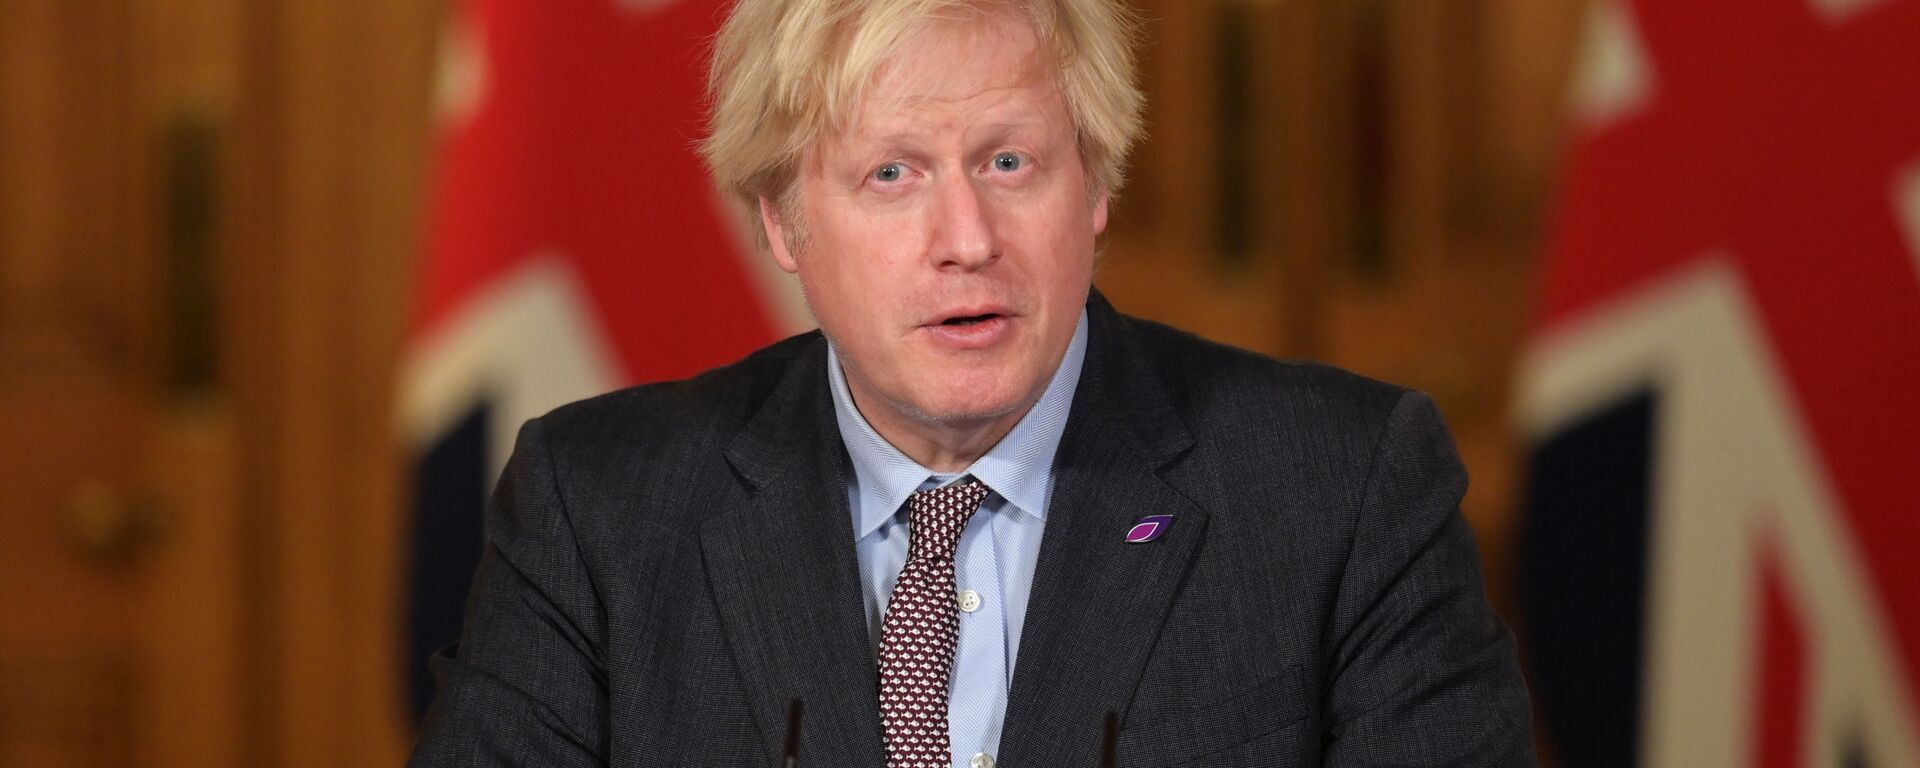 Boris Johnson, primer ministro del Reino Unido  - Sputnik Mundo, 1920, 01.12.2021